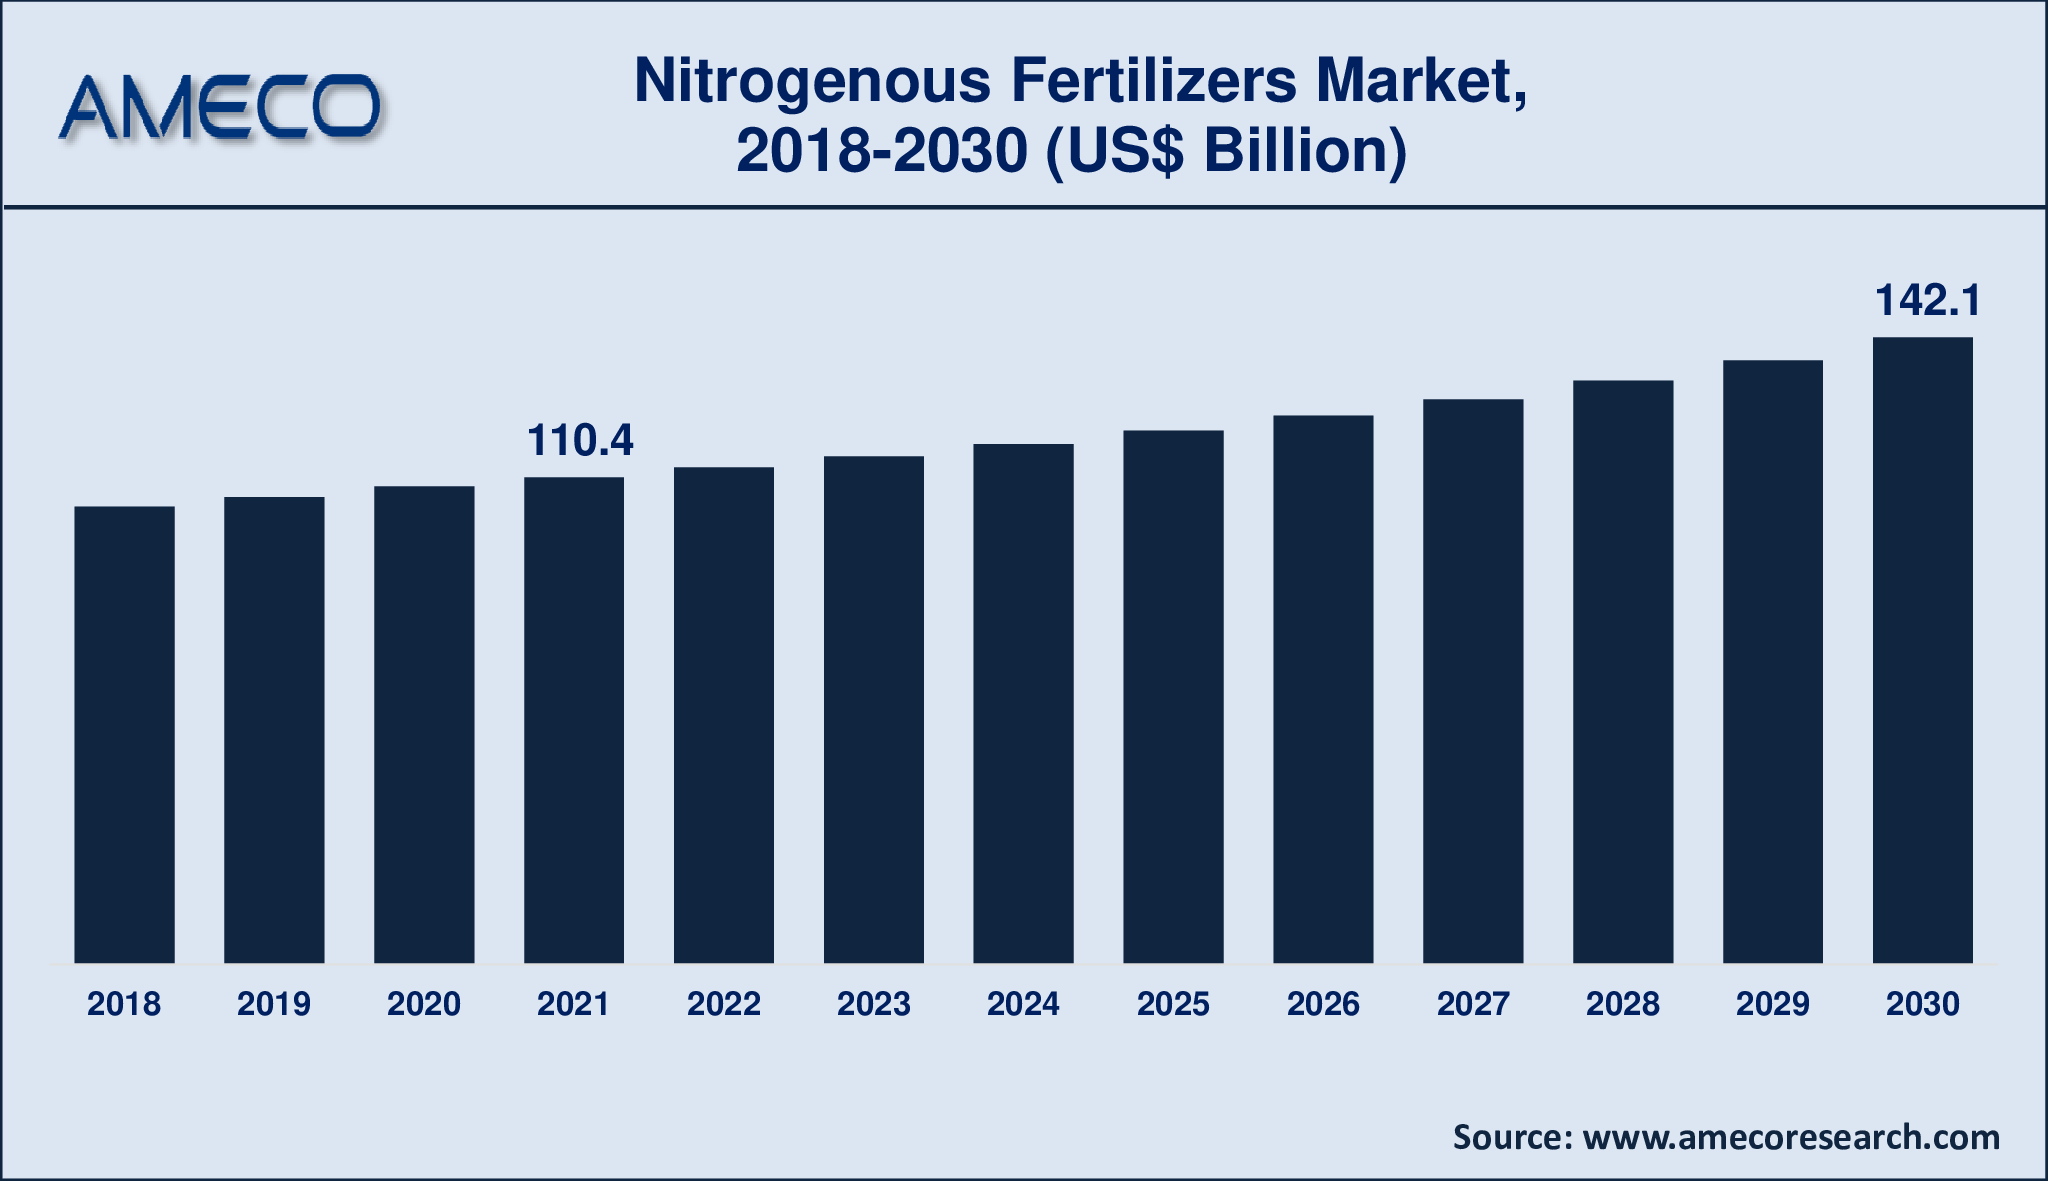 Nitrogenous Fertilizers Market Analysis Period